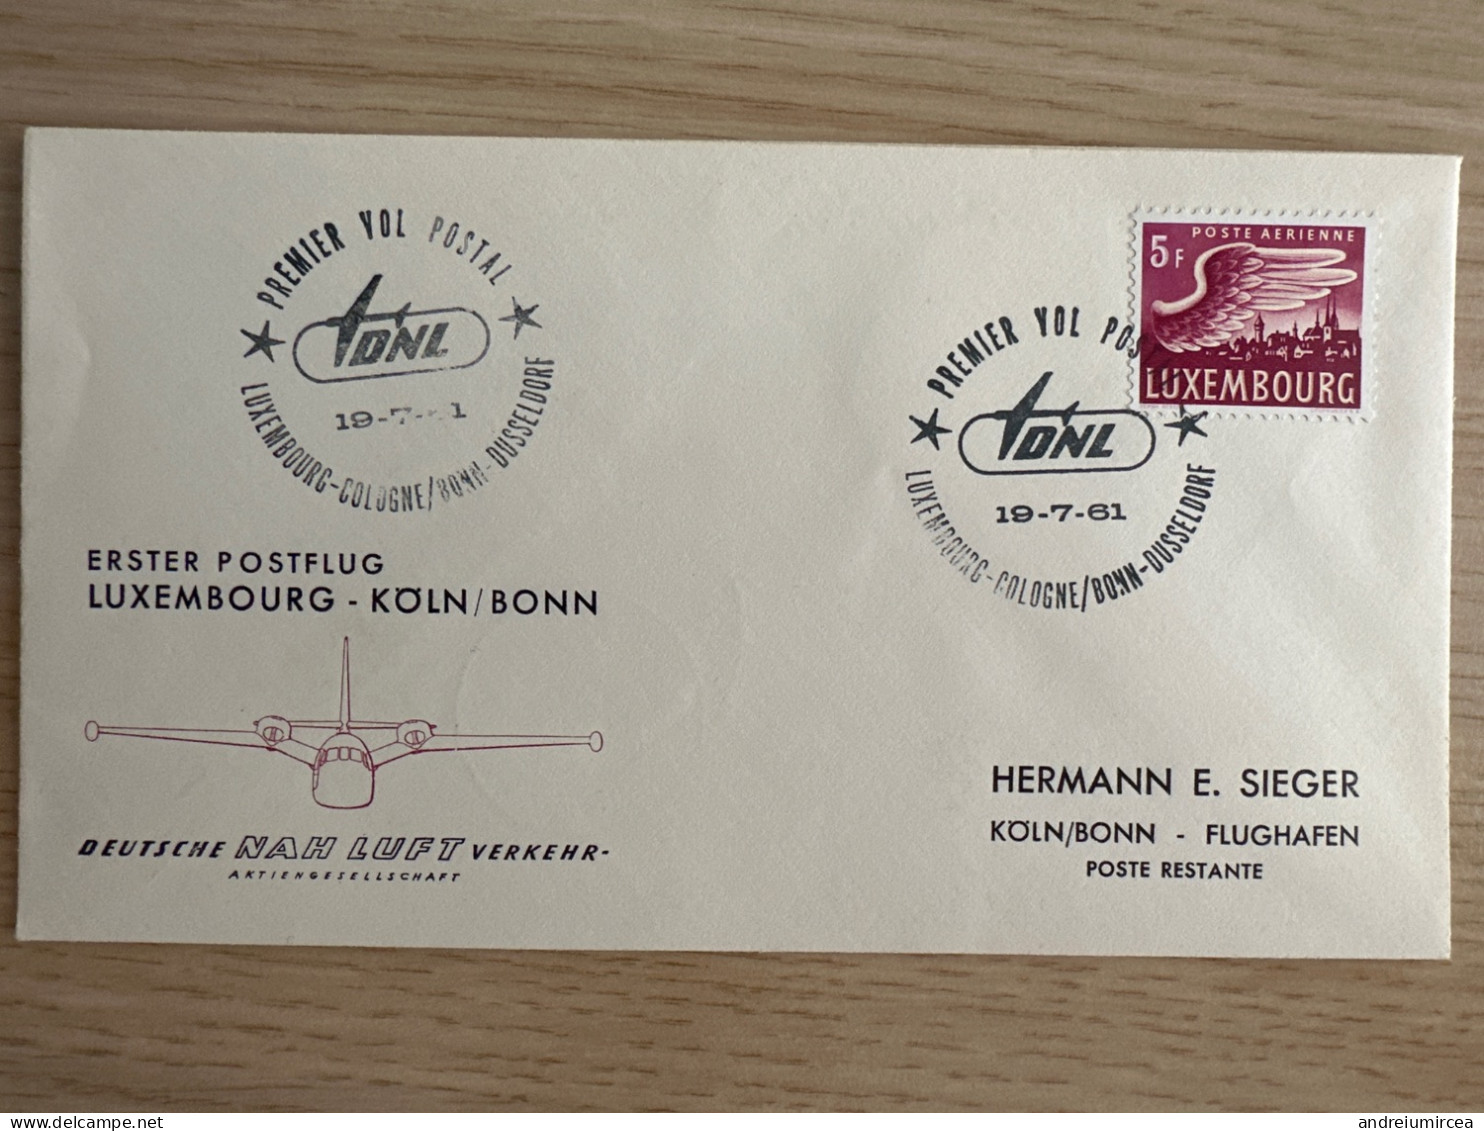 1961 Premier Vol Postal Luxembourg-Koln/Bonn - Covers & Documents